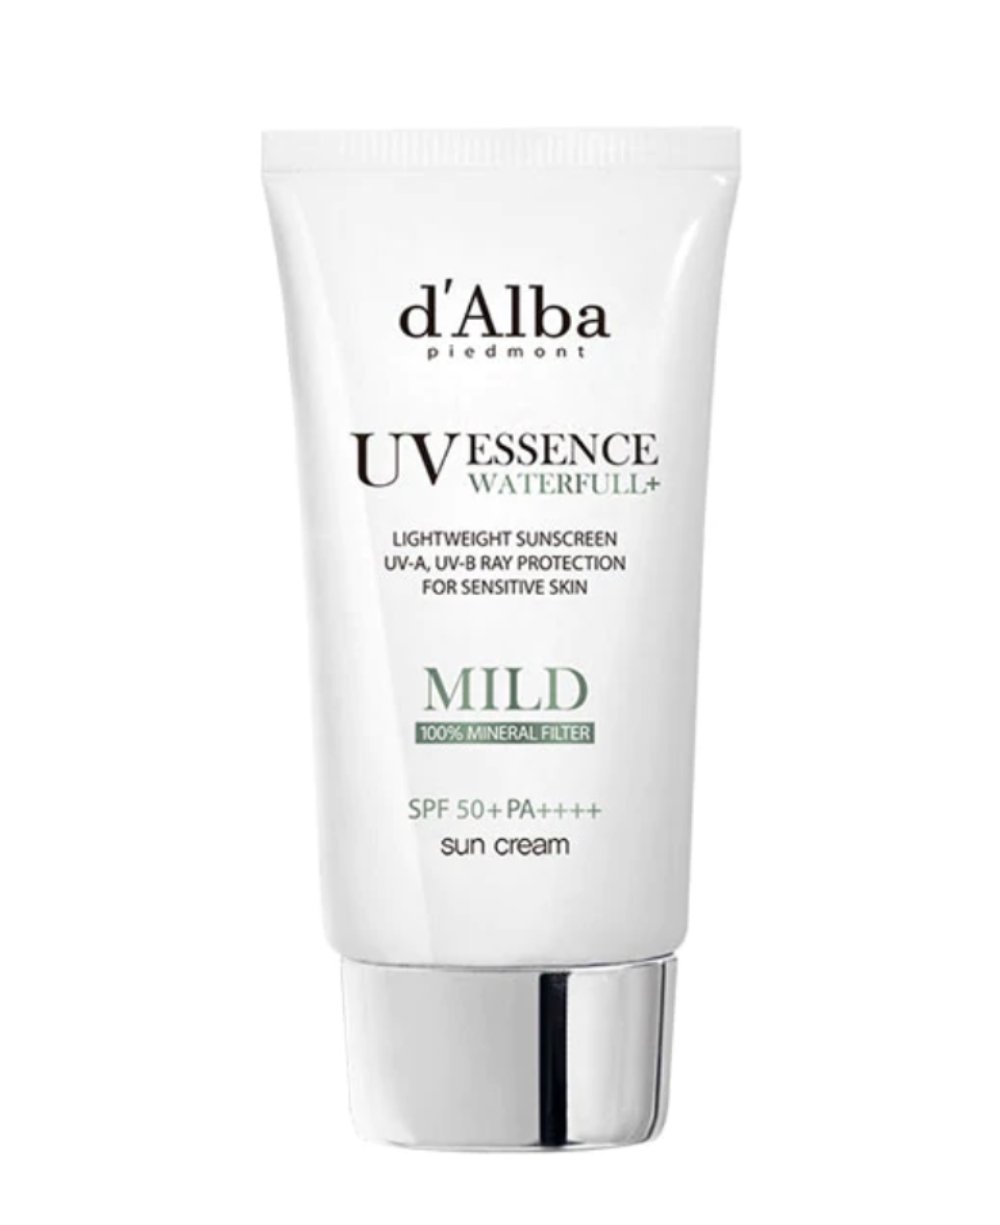 d'Alba PIEDMONT - Waterfull Essence MILD Sun Cream SPF50+ PA++++ 50ml - The Face Method